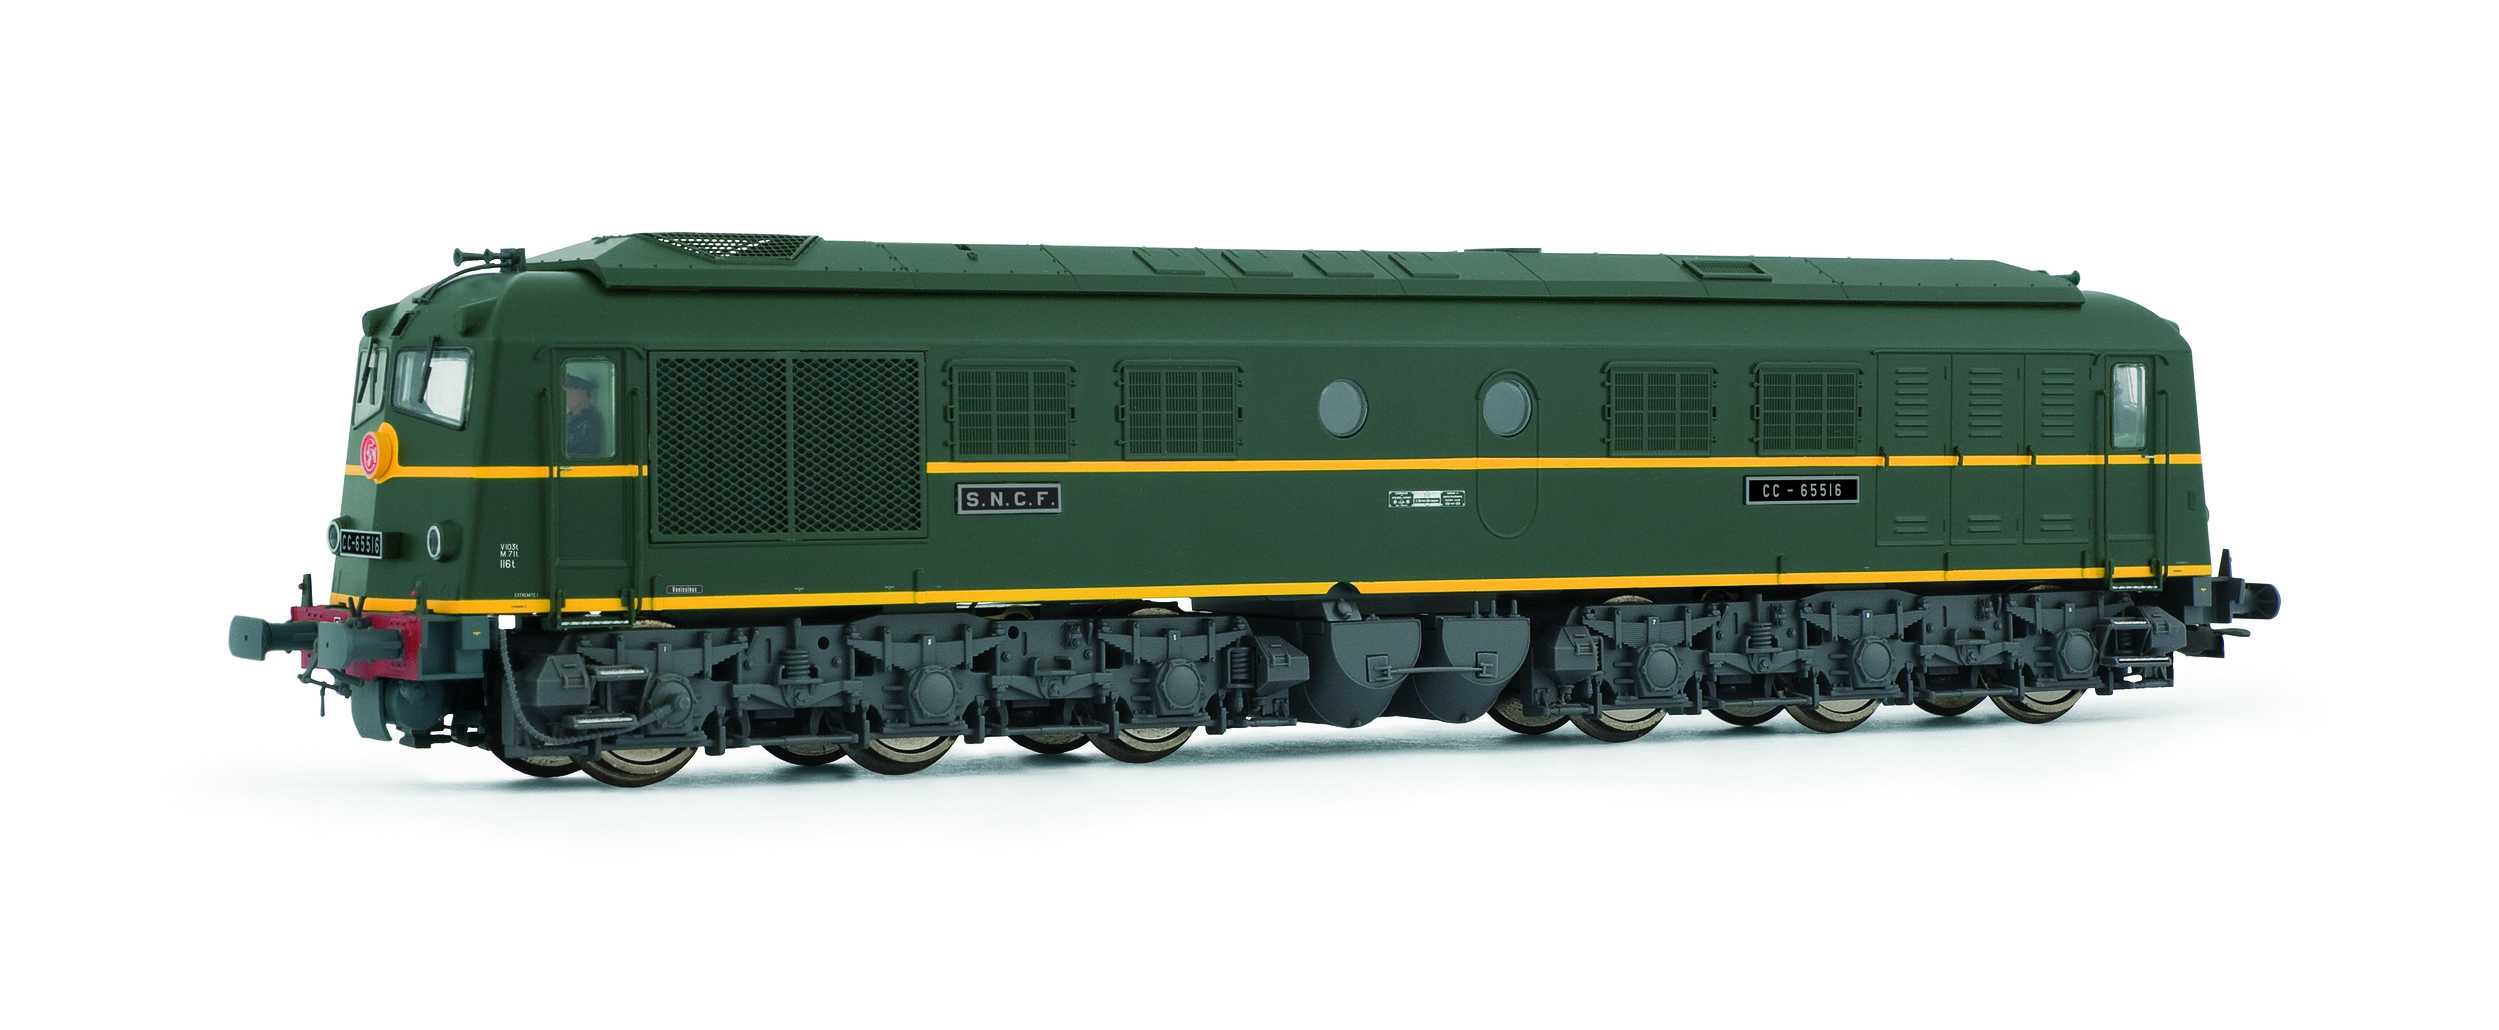 Trains miniatures : locomotives et autorail - Diesel locomotive CC6551